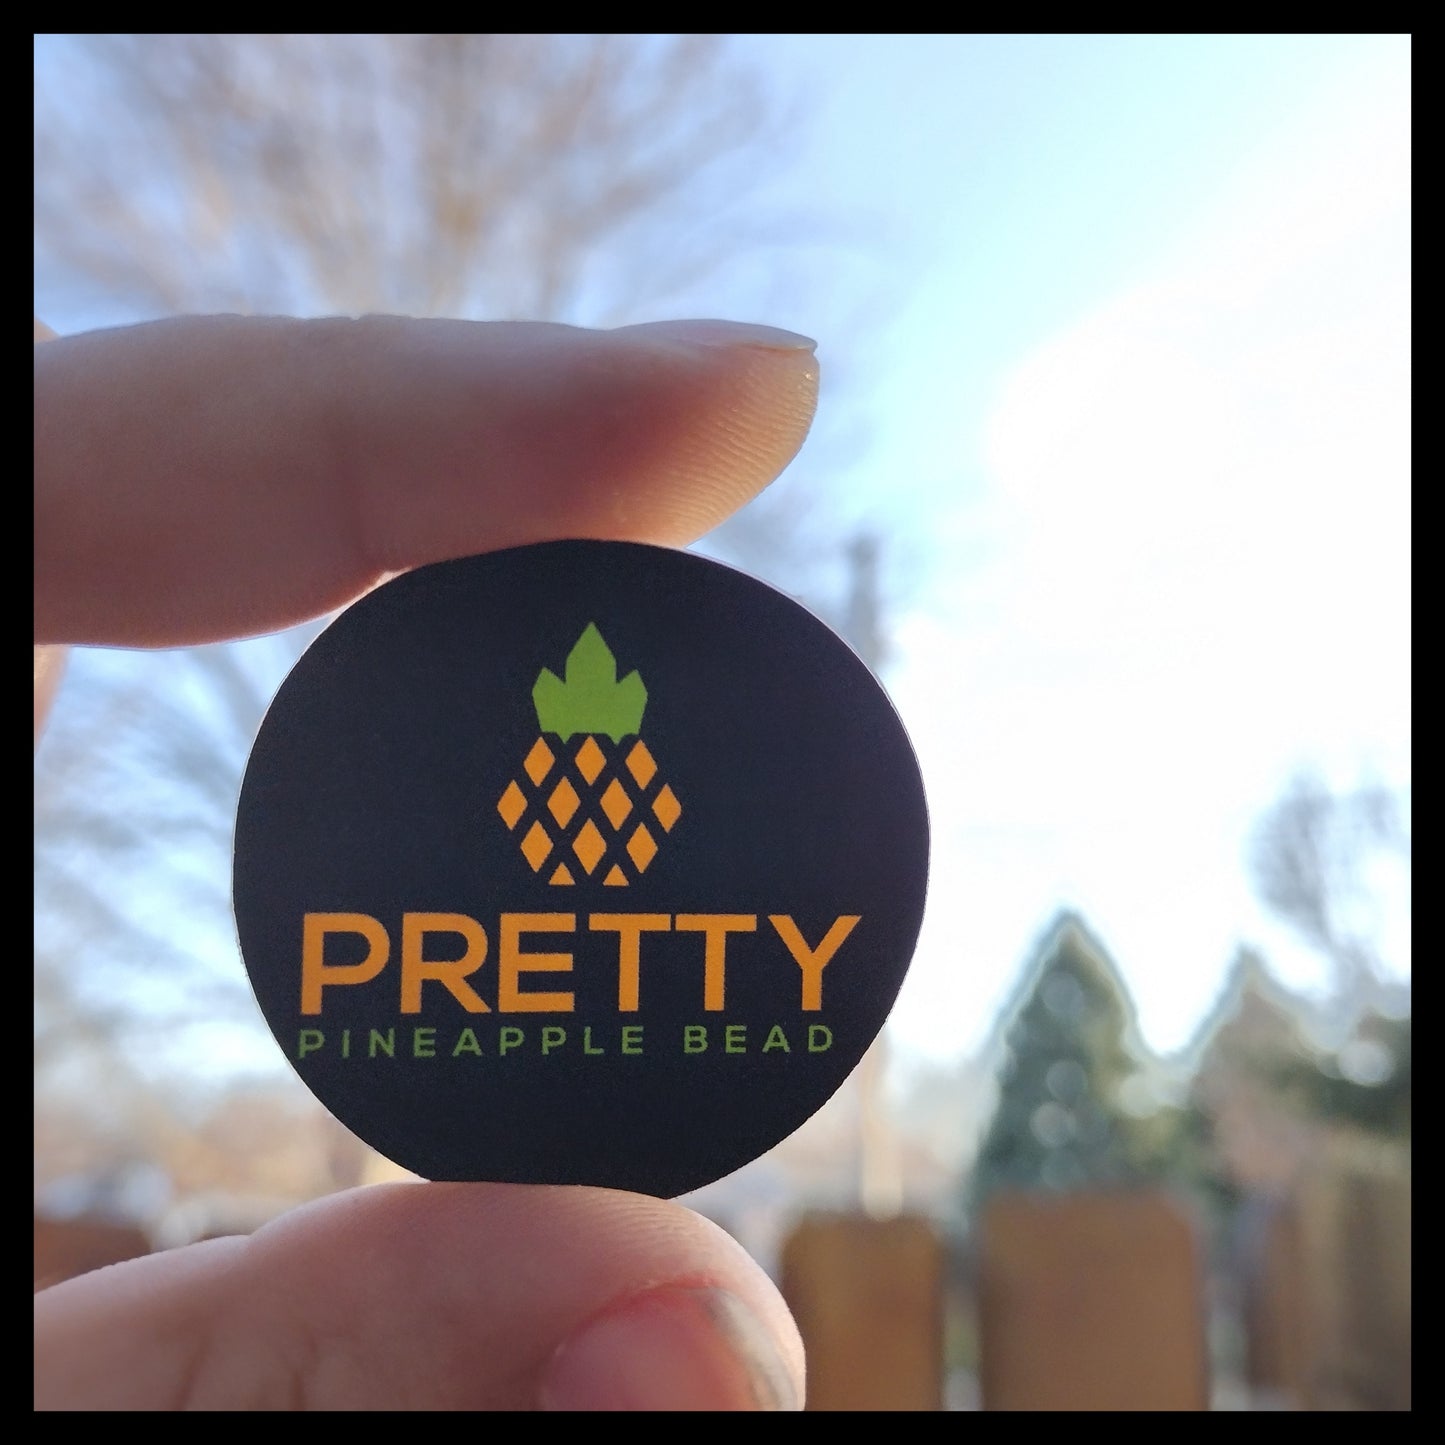 Pretty Pineapple Bead Sticker freeshipping - Prettypineapplebead